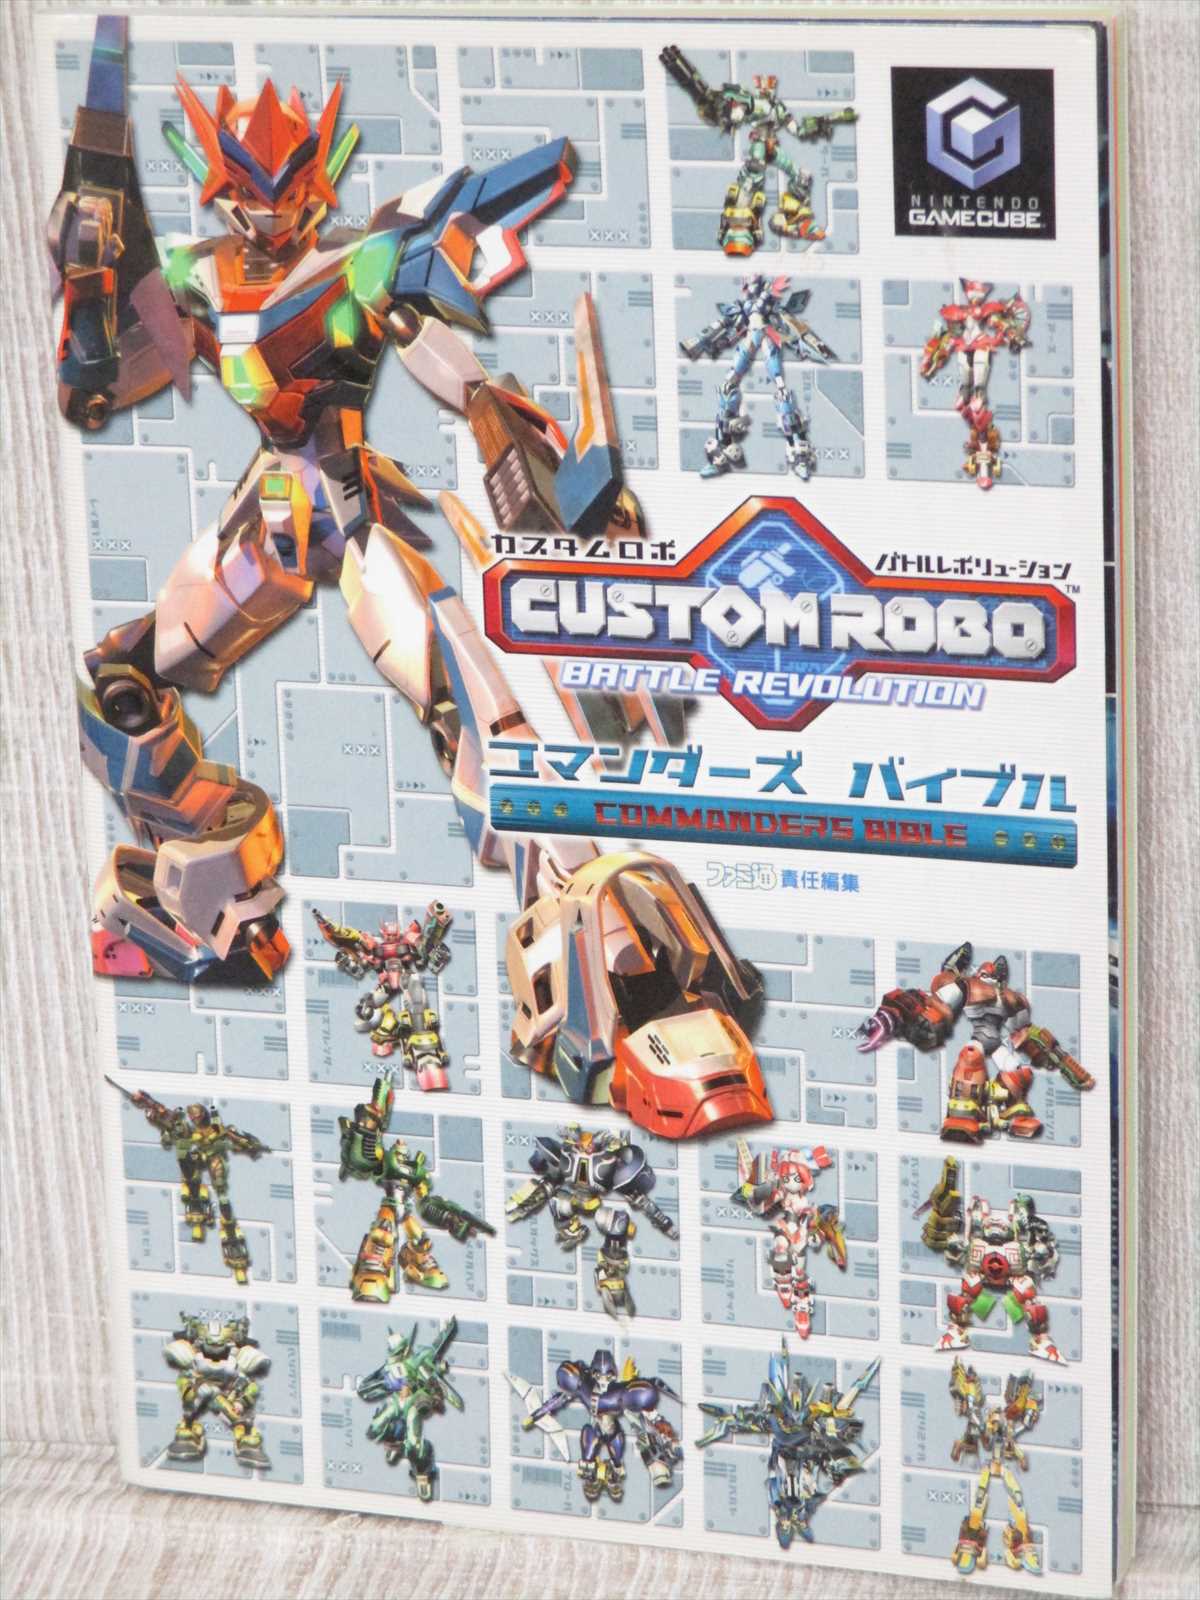 Custom Robo Battle Revolution Commander S Bible Guide Game Cube Book 04 Eb40 Ebay